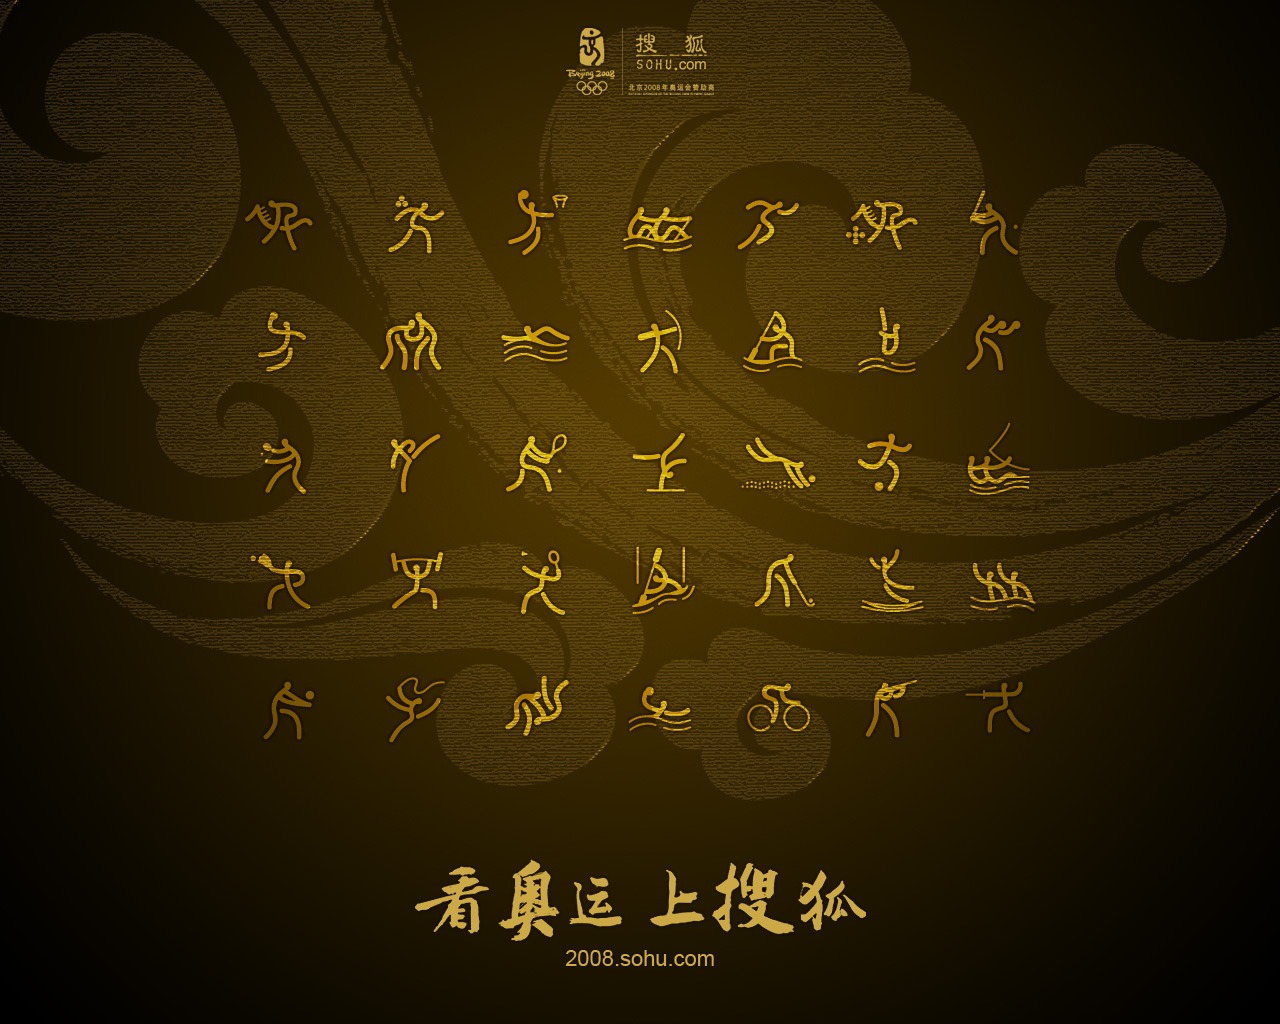 Sohu Olympic Series Wallpaper #15 - 1280x1024